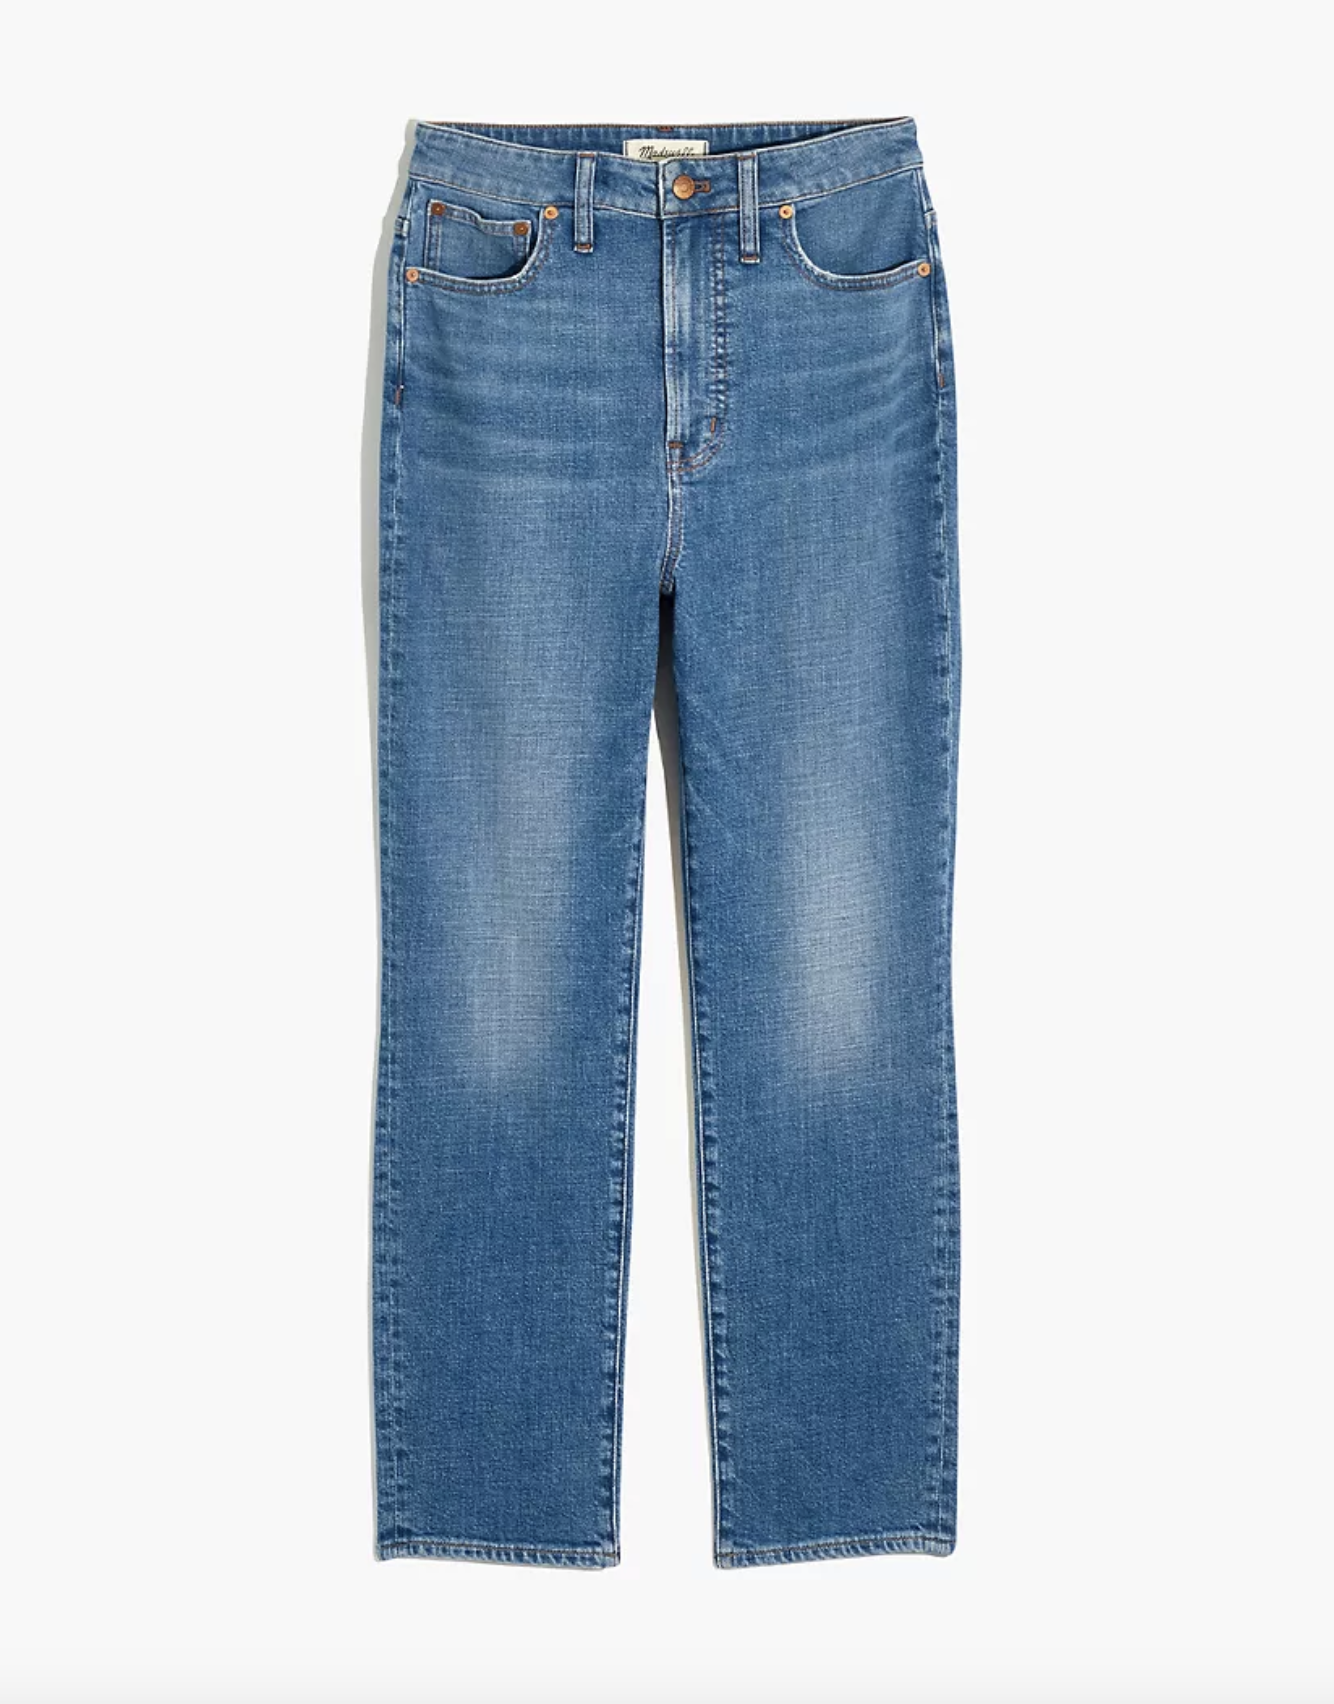 The Plus Curvy Perfect Vintage Crop Jean